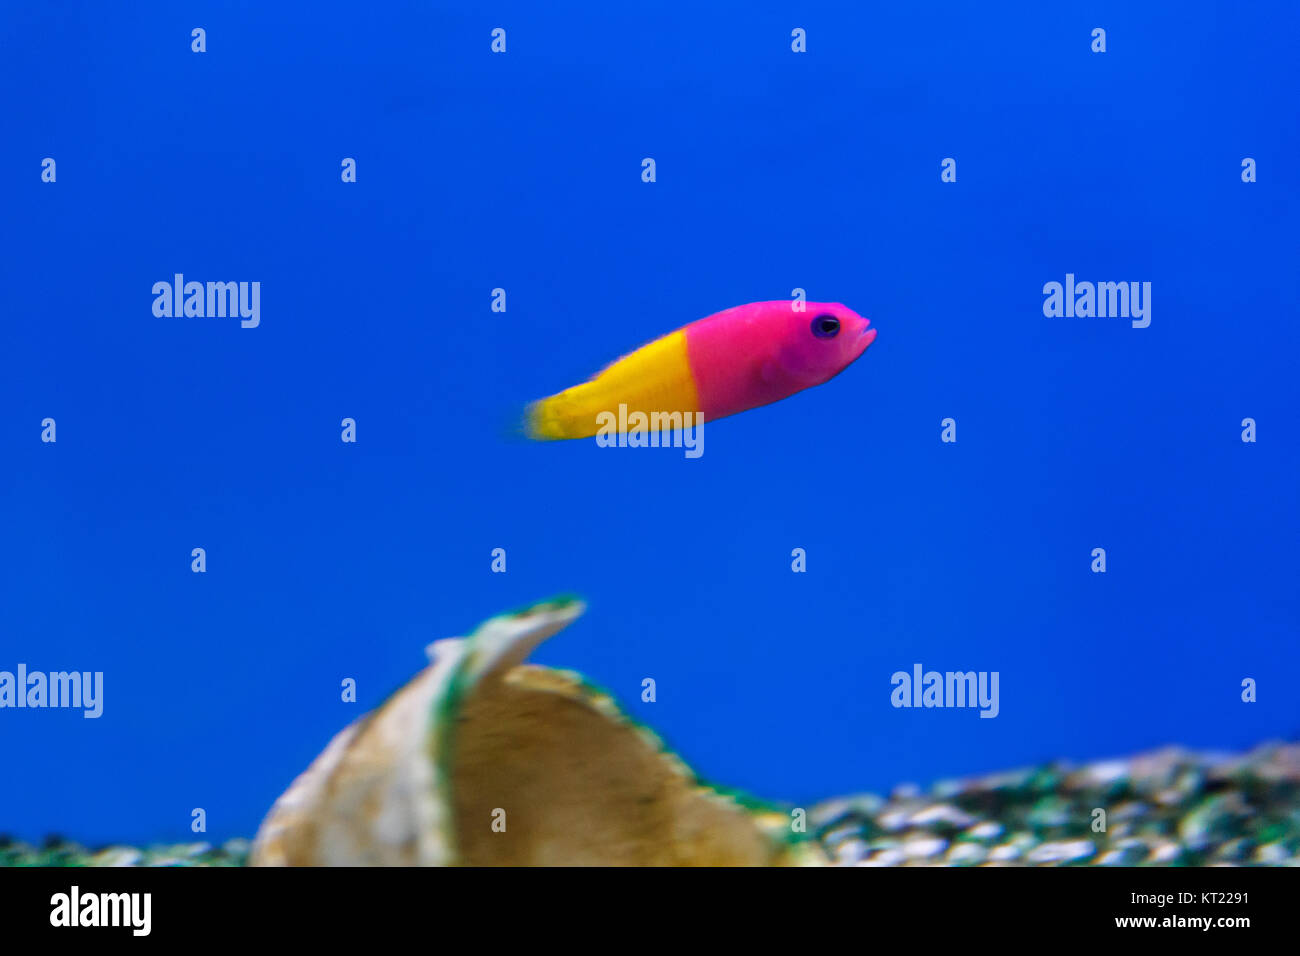 Small vivid pseudochromis fish swimmimg in aquarium Stock Photo